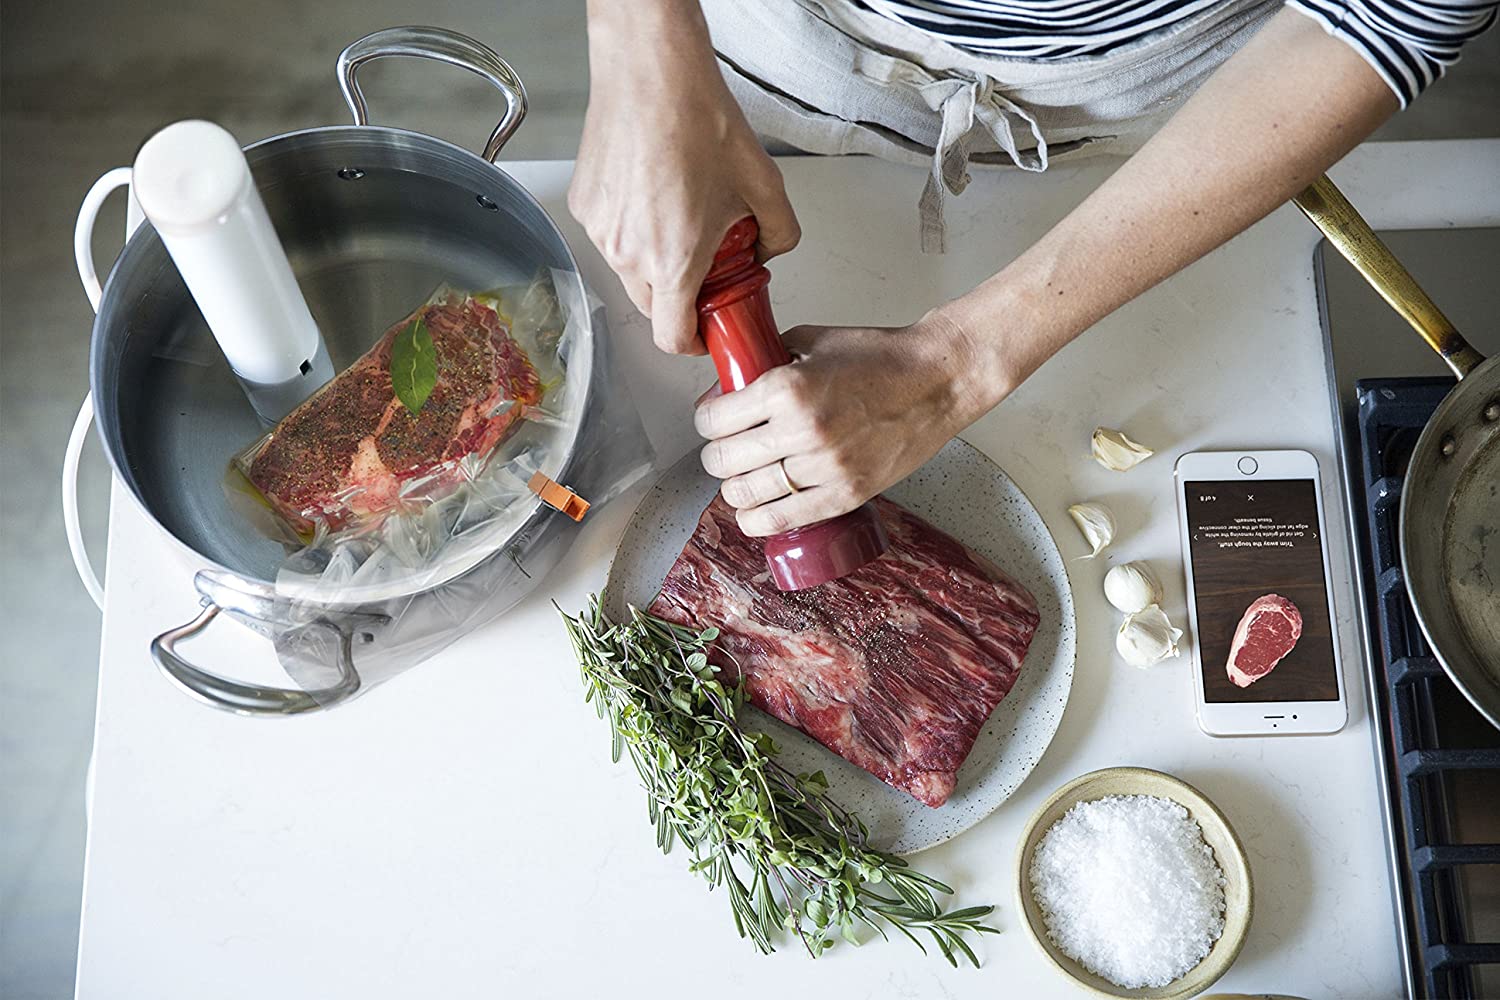 https://kitchenteller.com/wp-content/uploads/2021/08/Breville-CS20001-Joule-Sous-Vide-Mini-Cooker-Review-cooking-steak.jpg